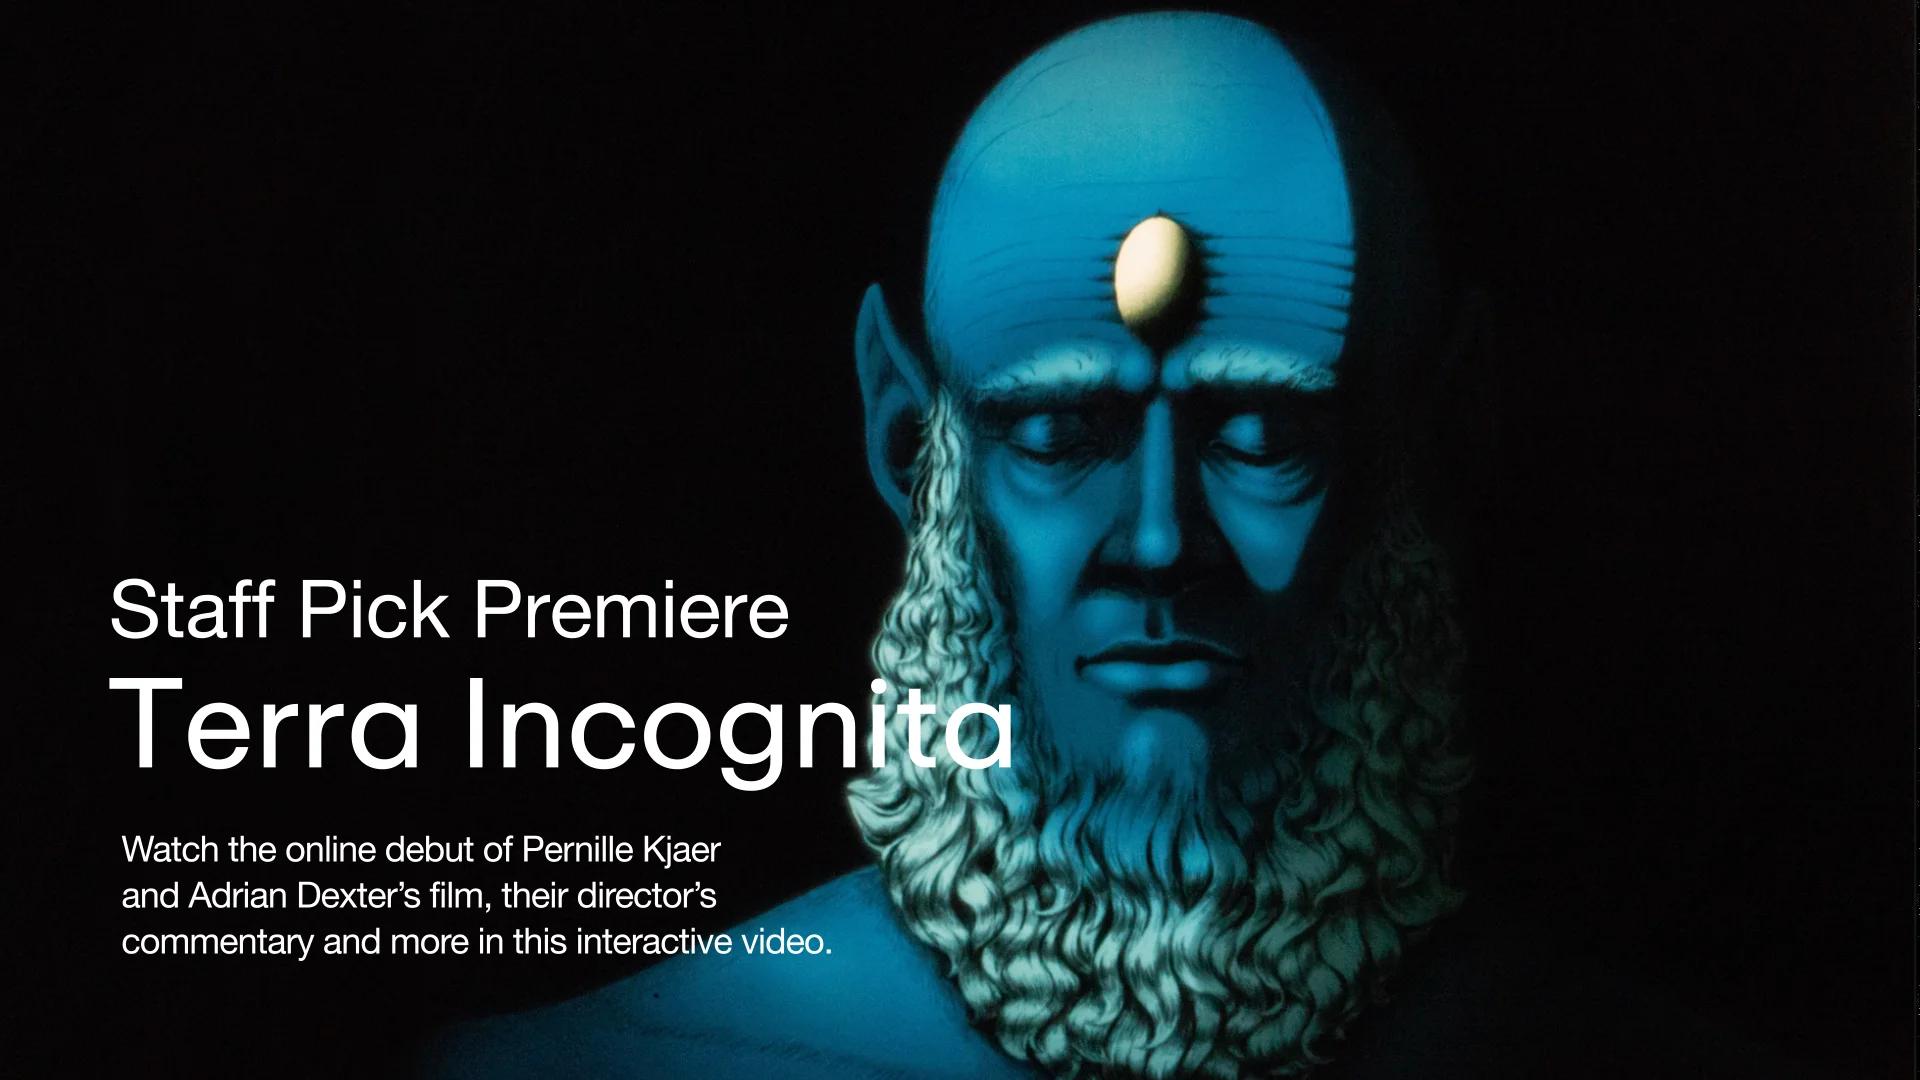 Terra Incognita on Vimeo [Video]